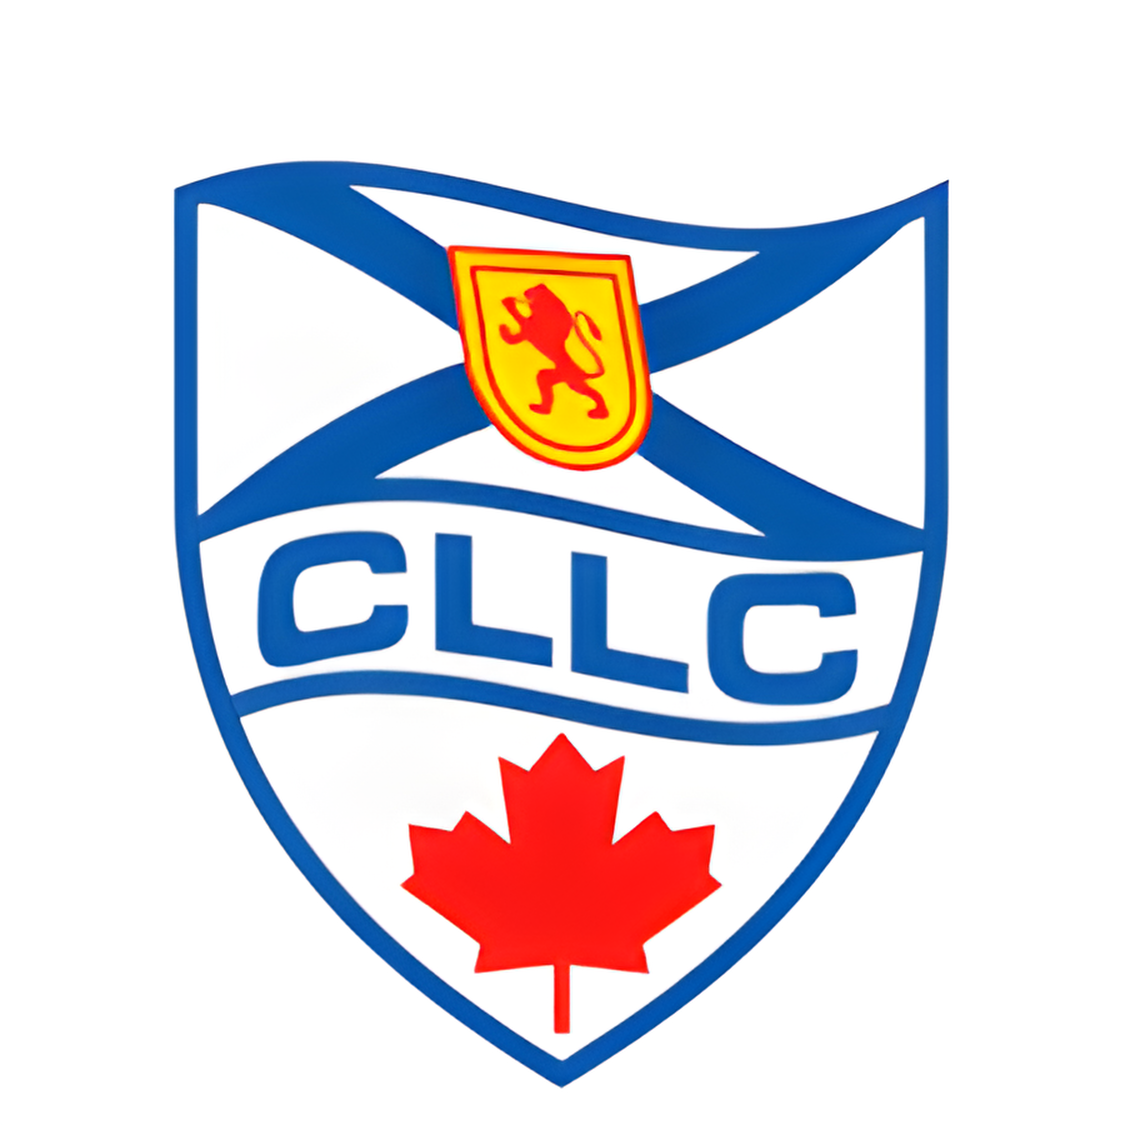 CLLC - Toronto